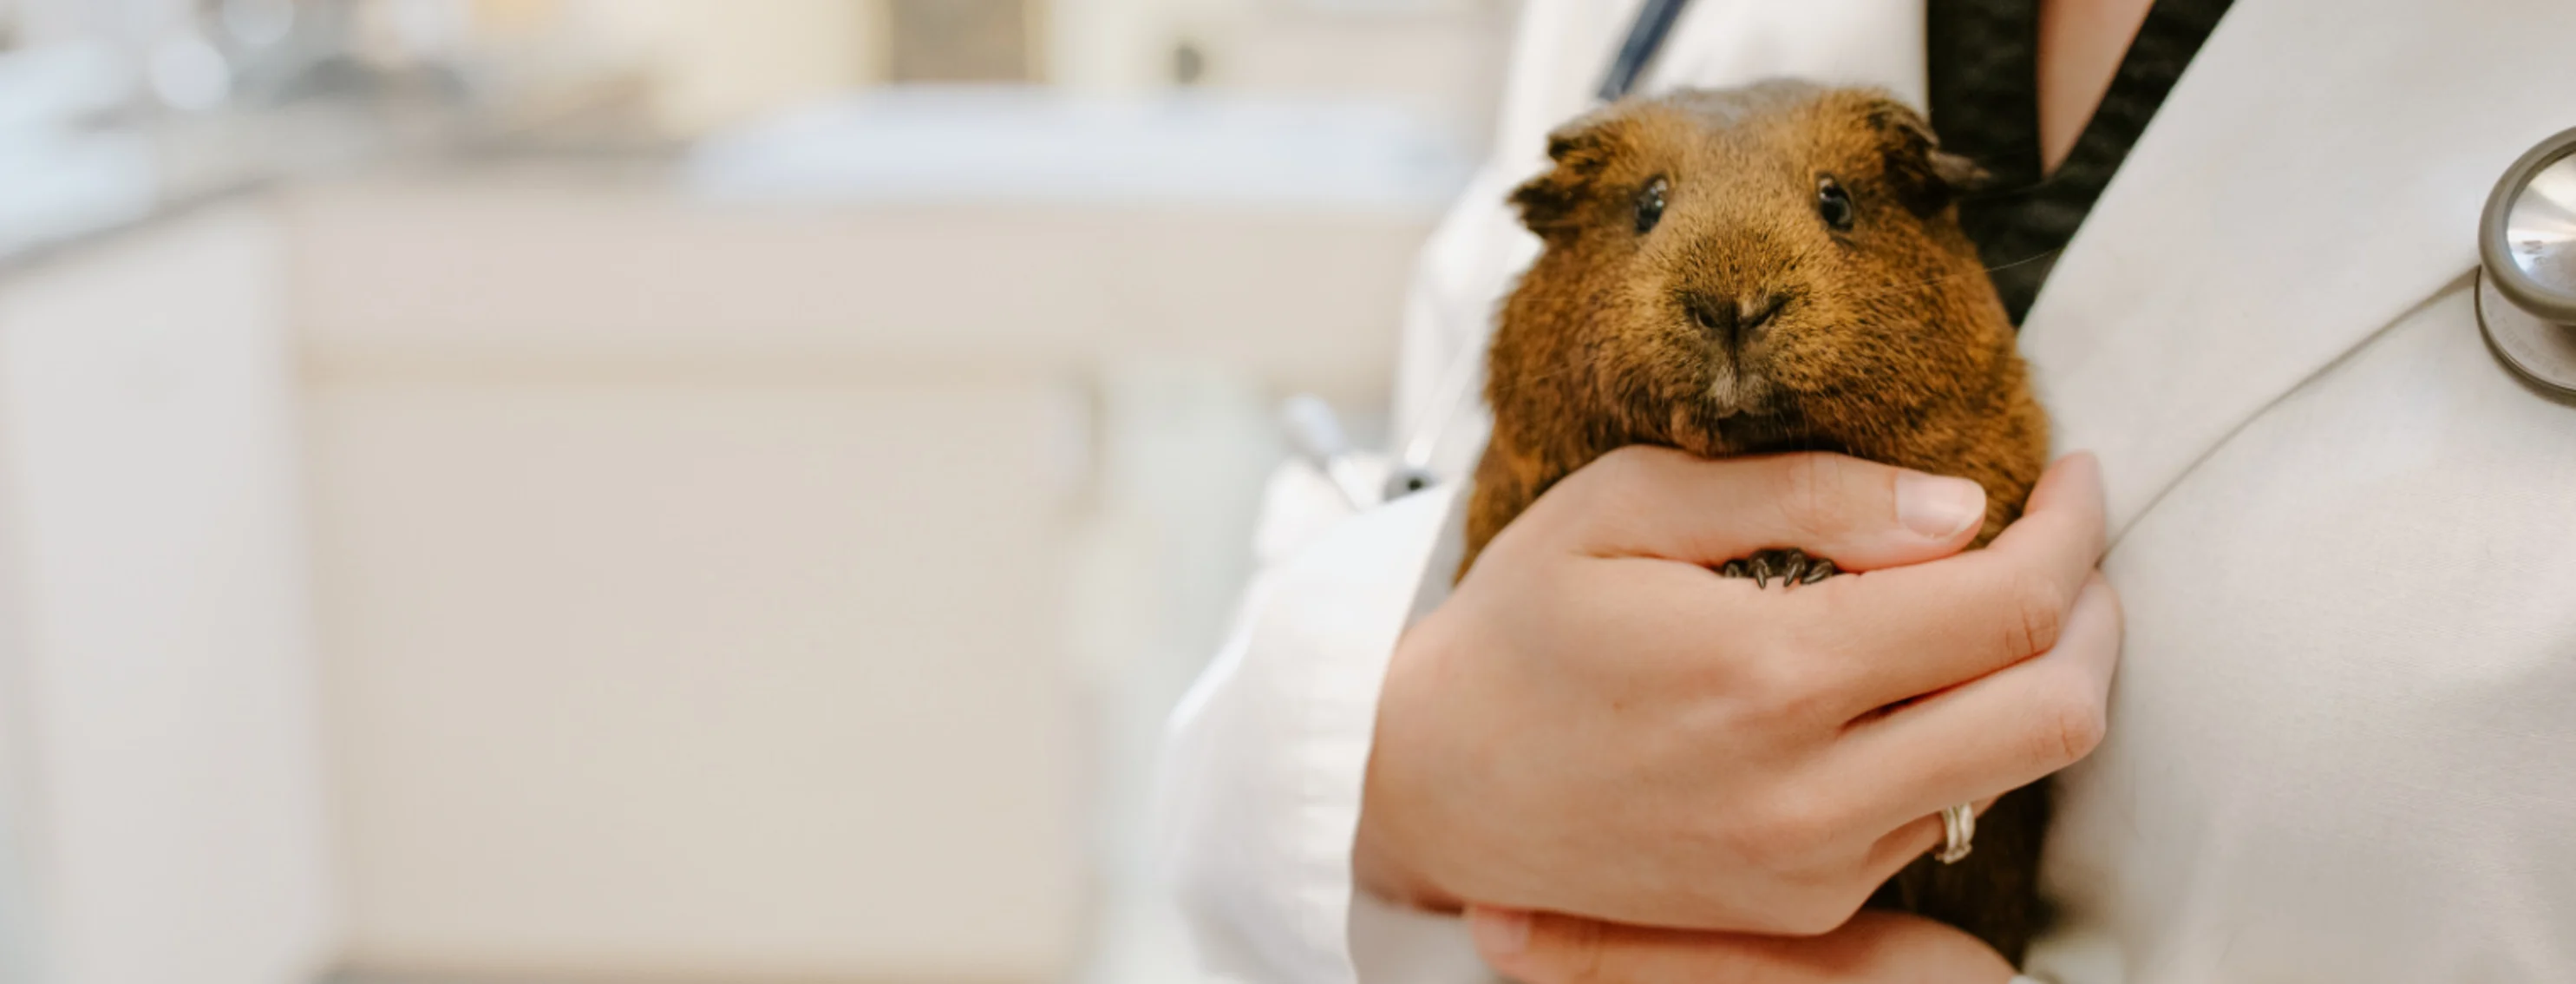 Veterinarian Holding Brown Guinea Pig